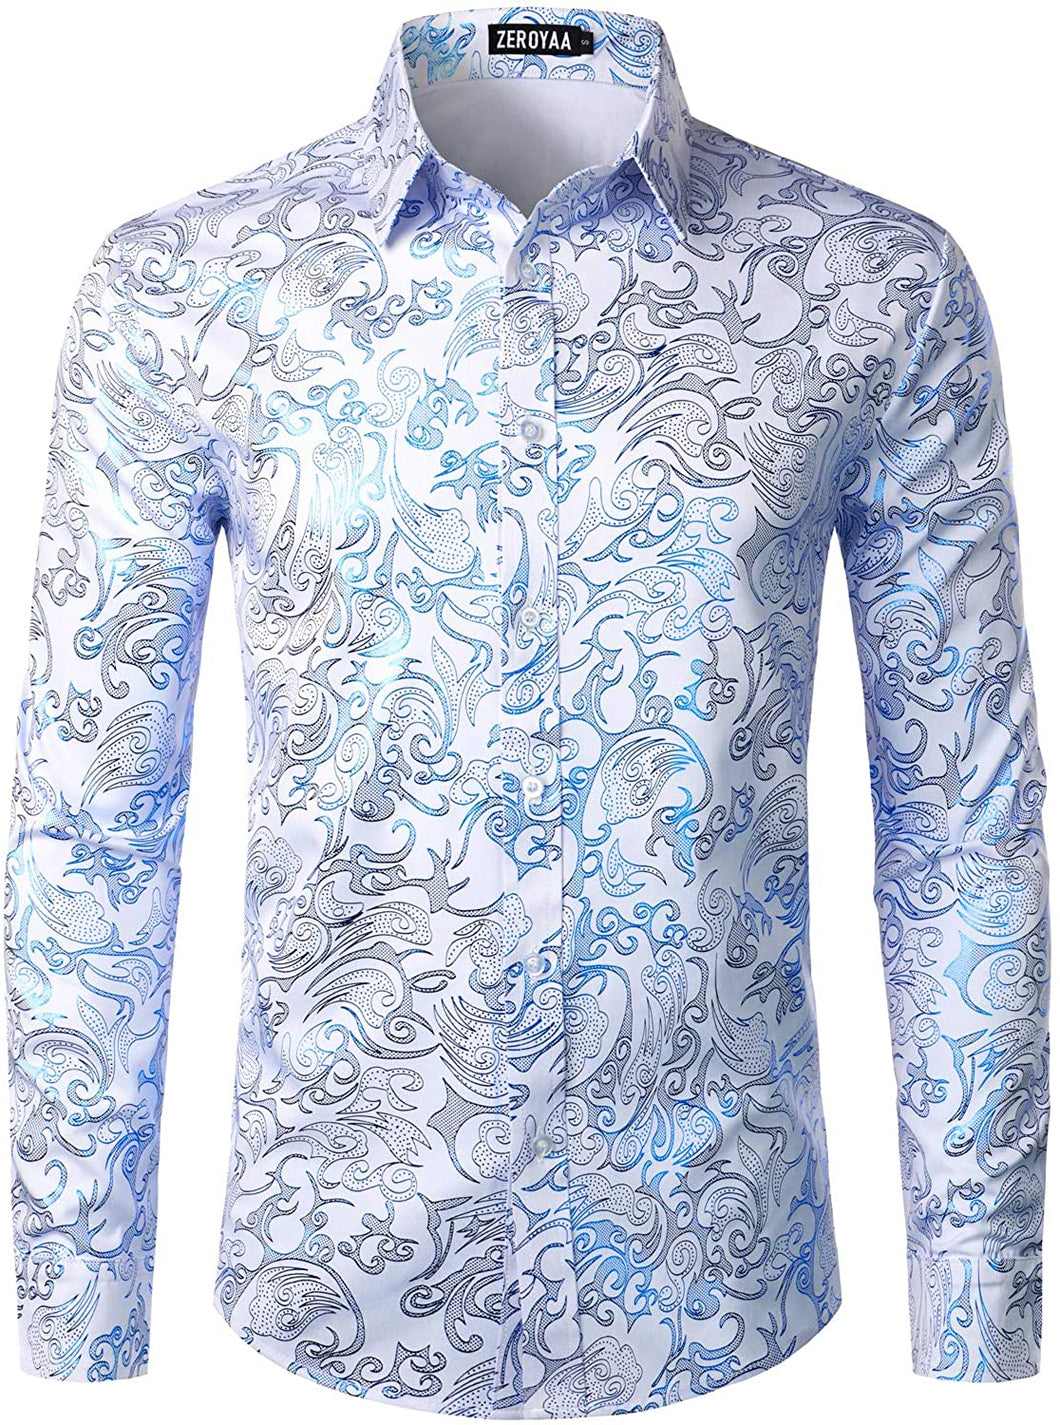 Men's Luxury White Royal Long Sleeve Button Up Shirt